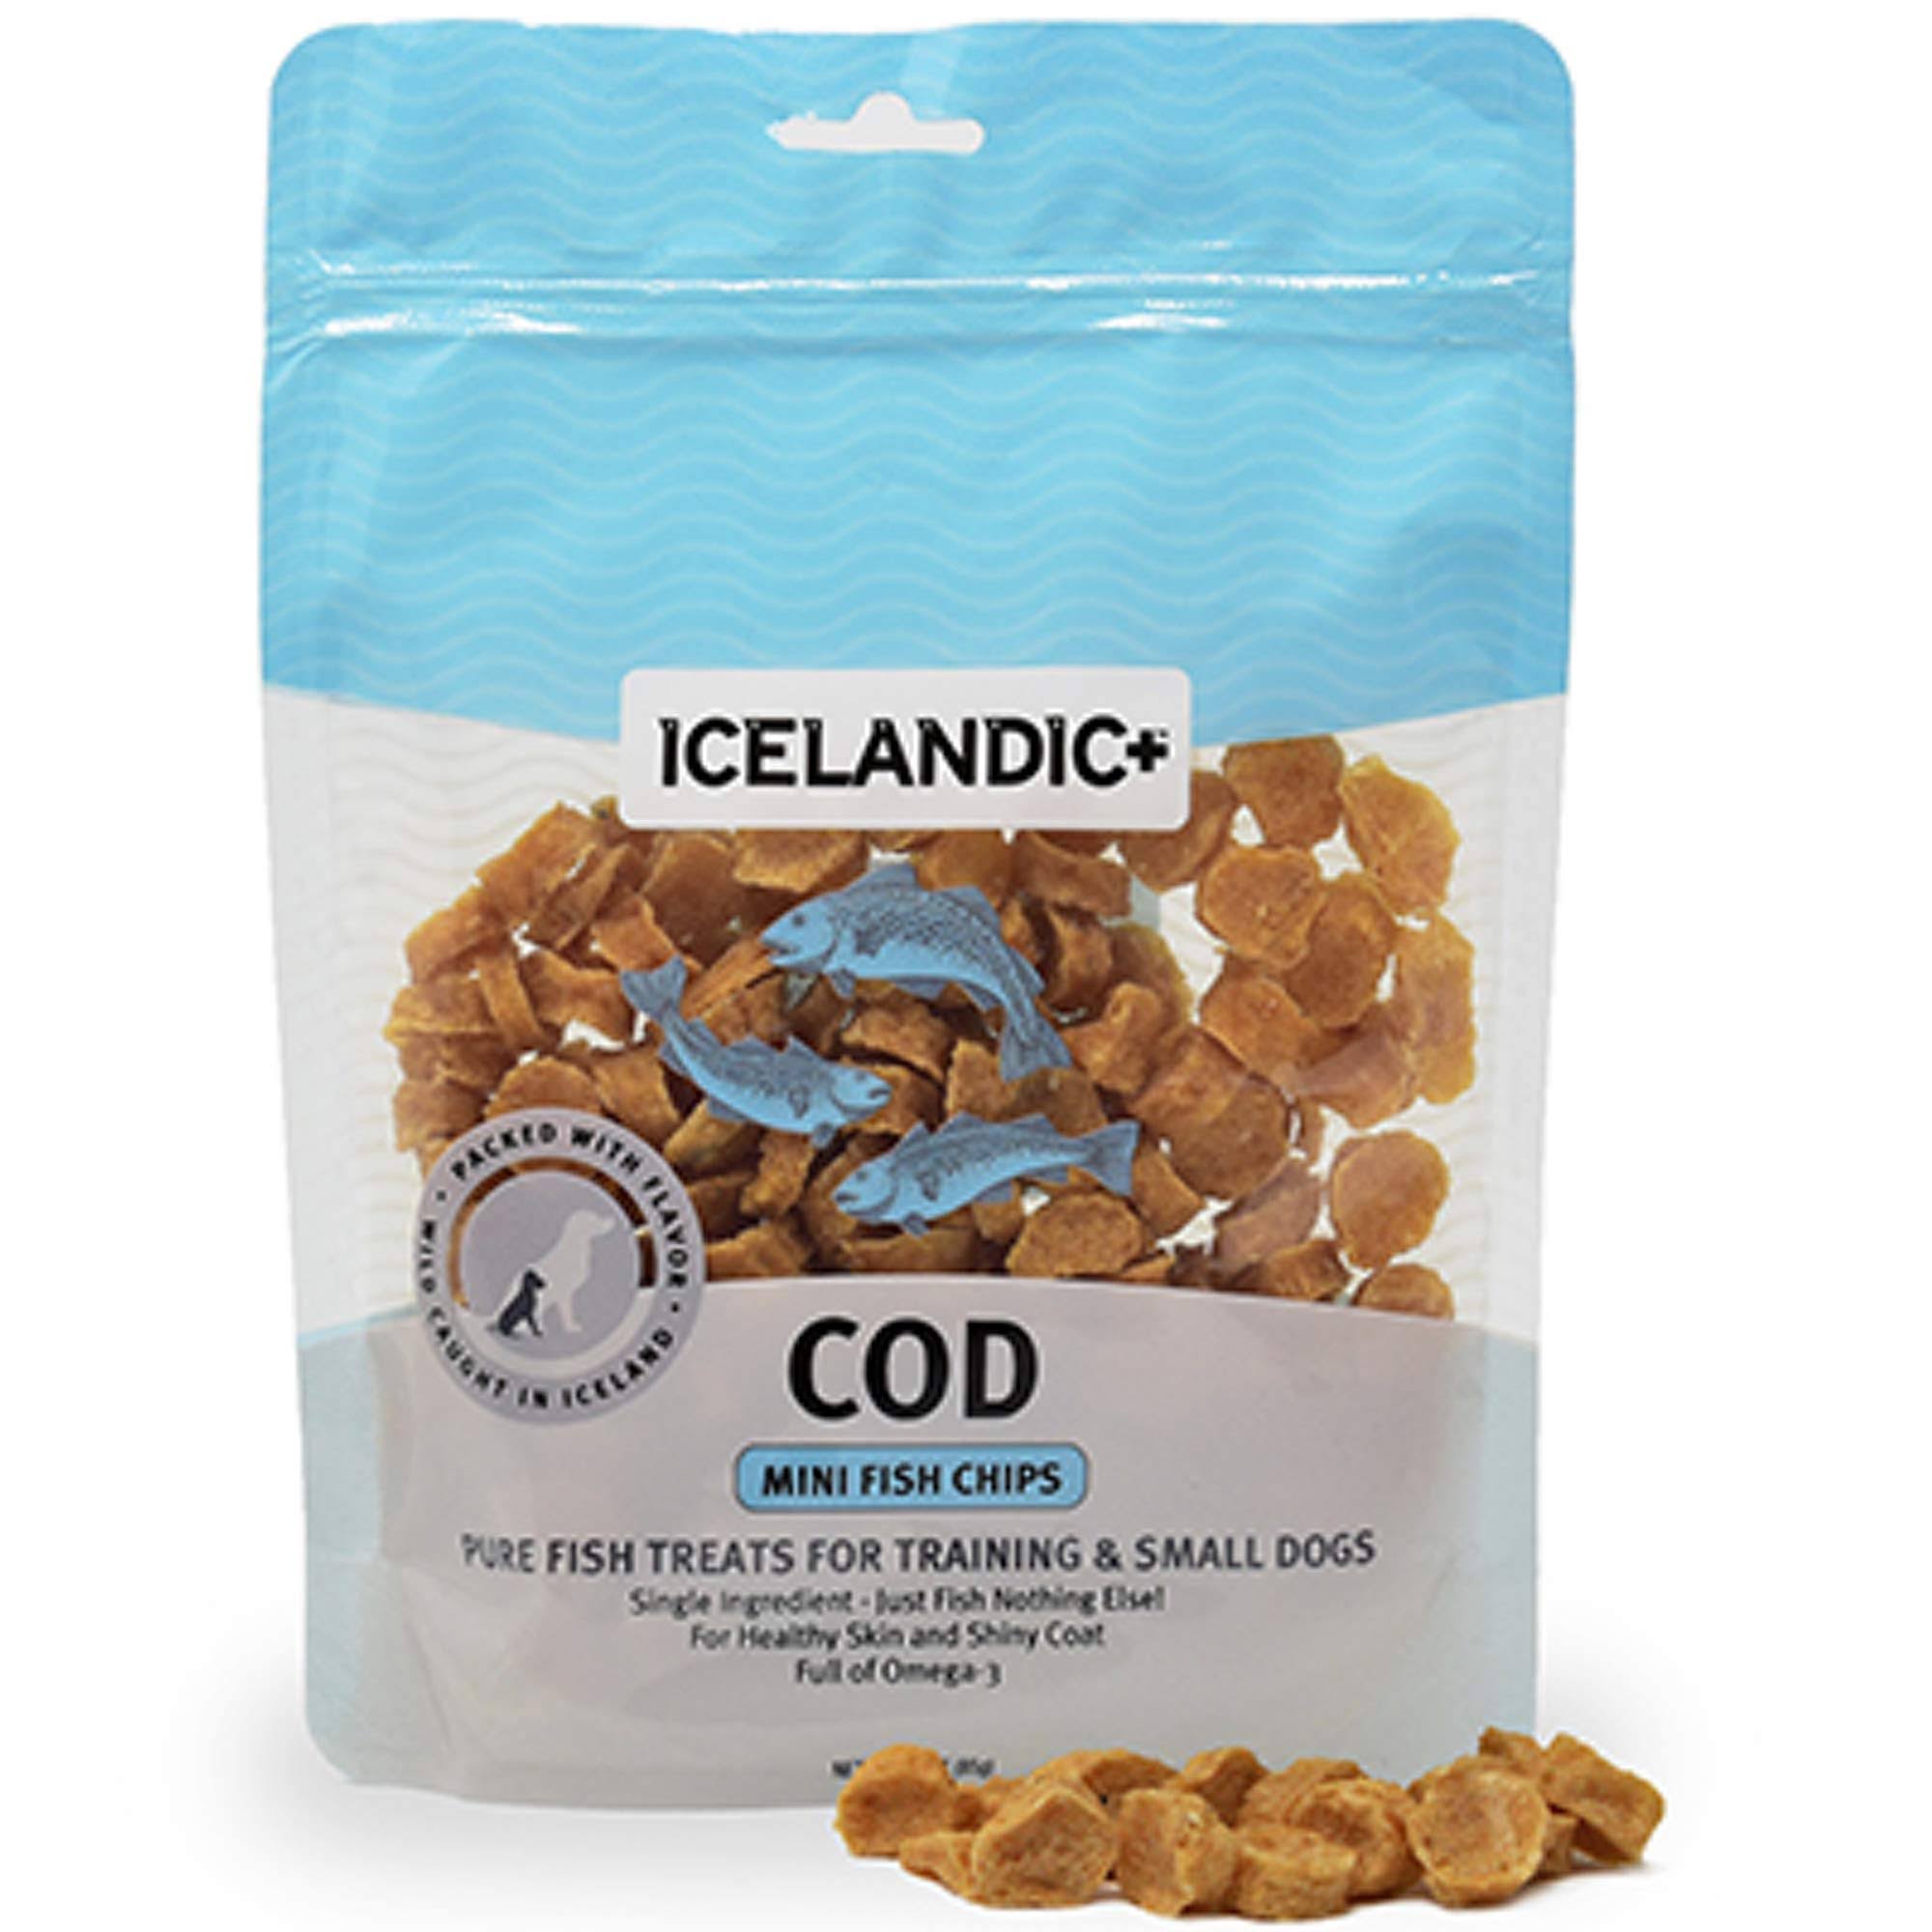 Icelandic+ Mini Cod Fish Chips Small Dog Treats - 3 oz